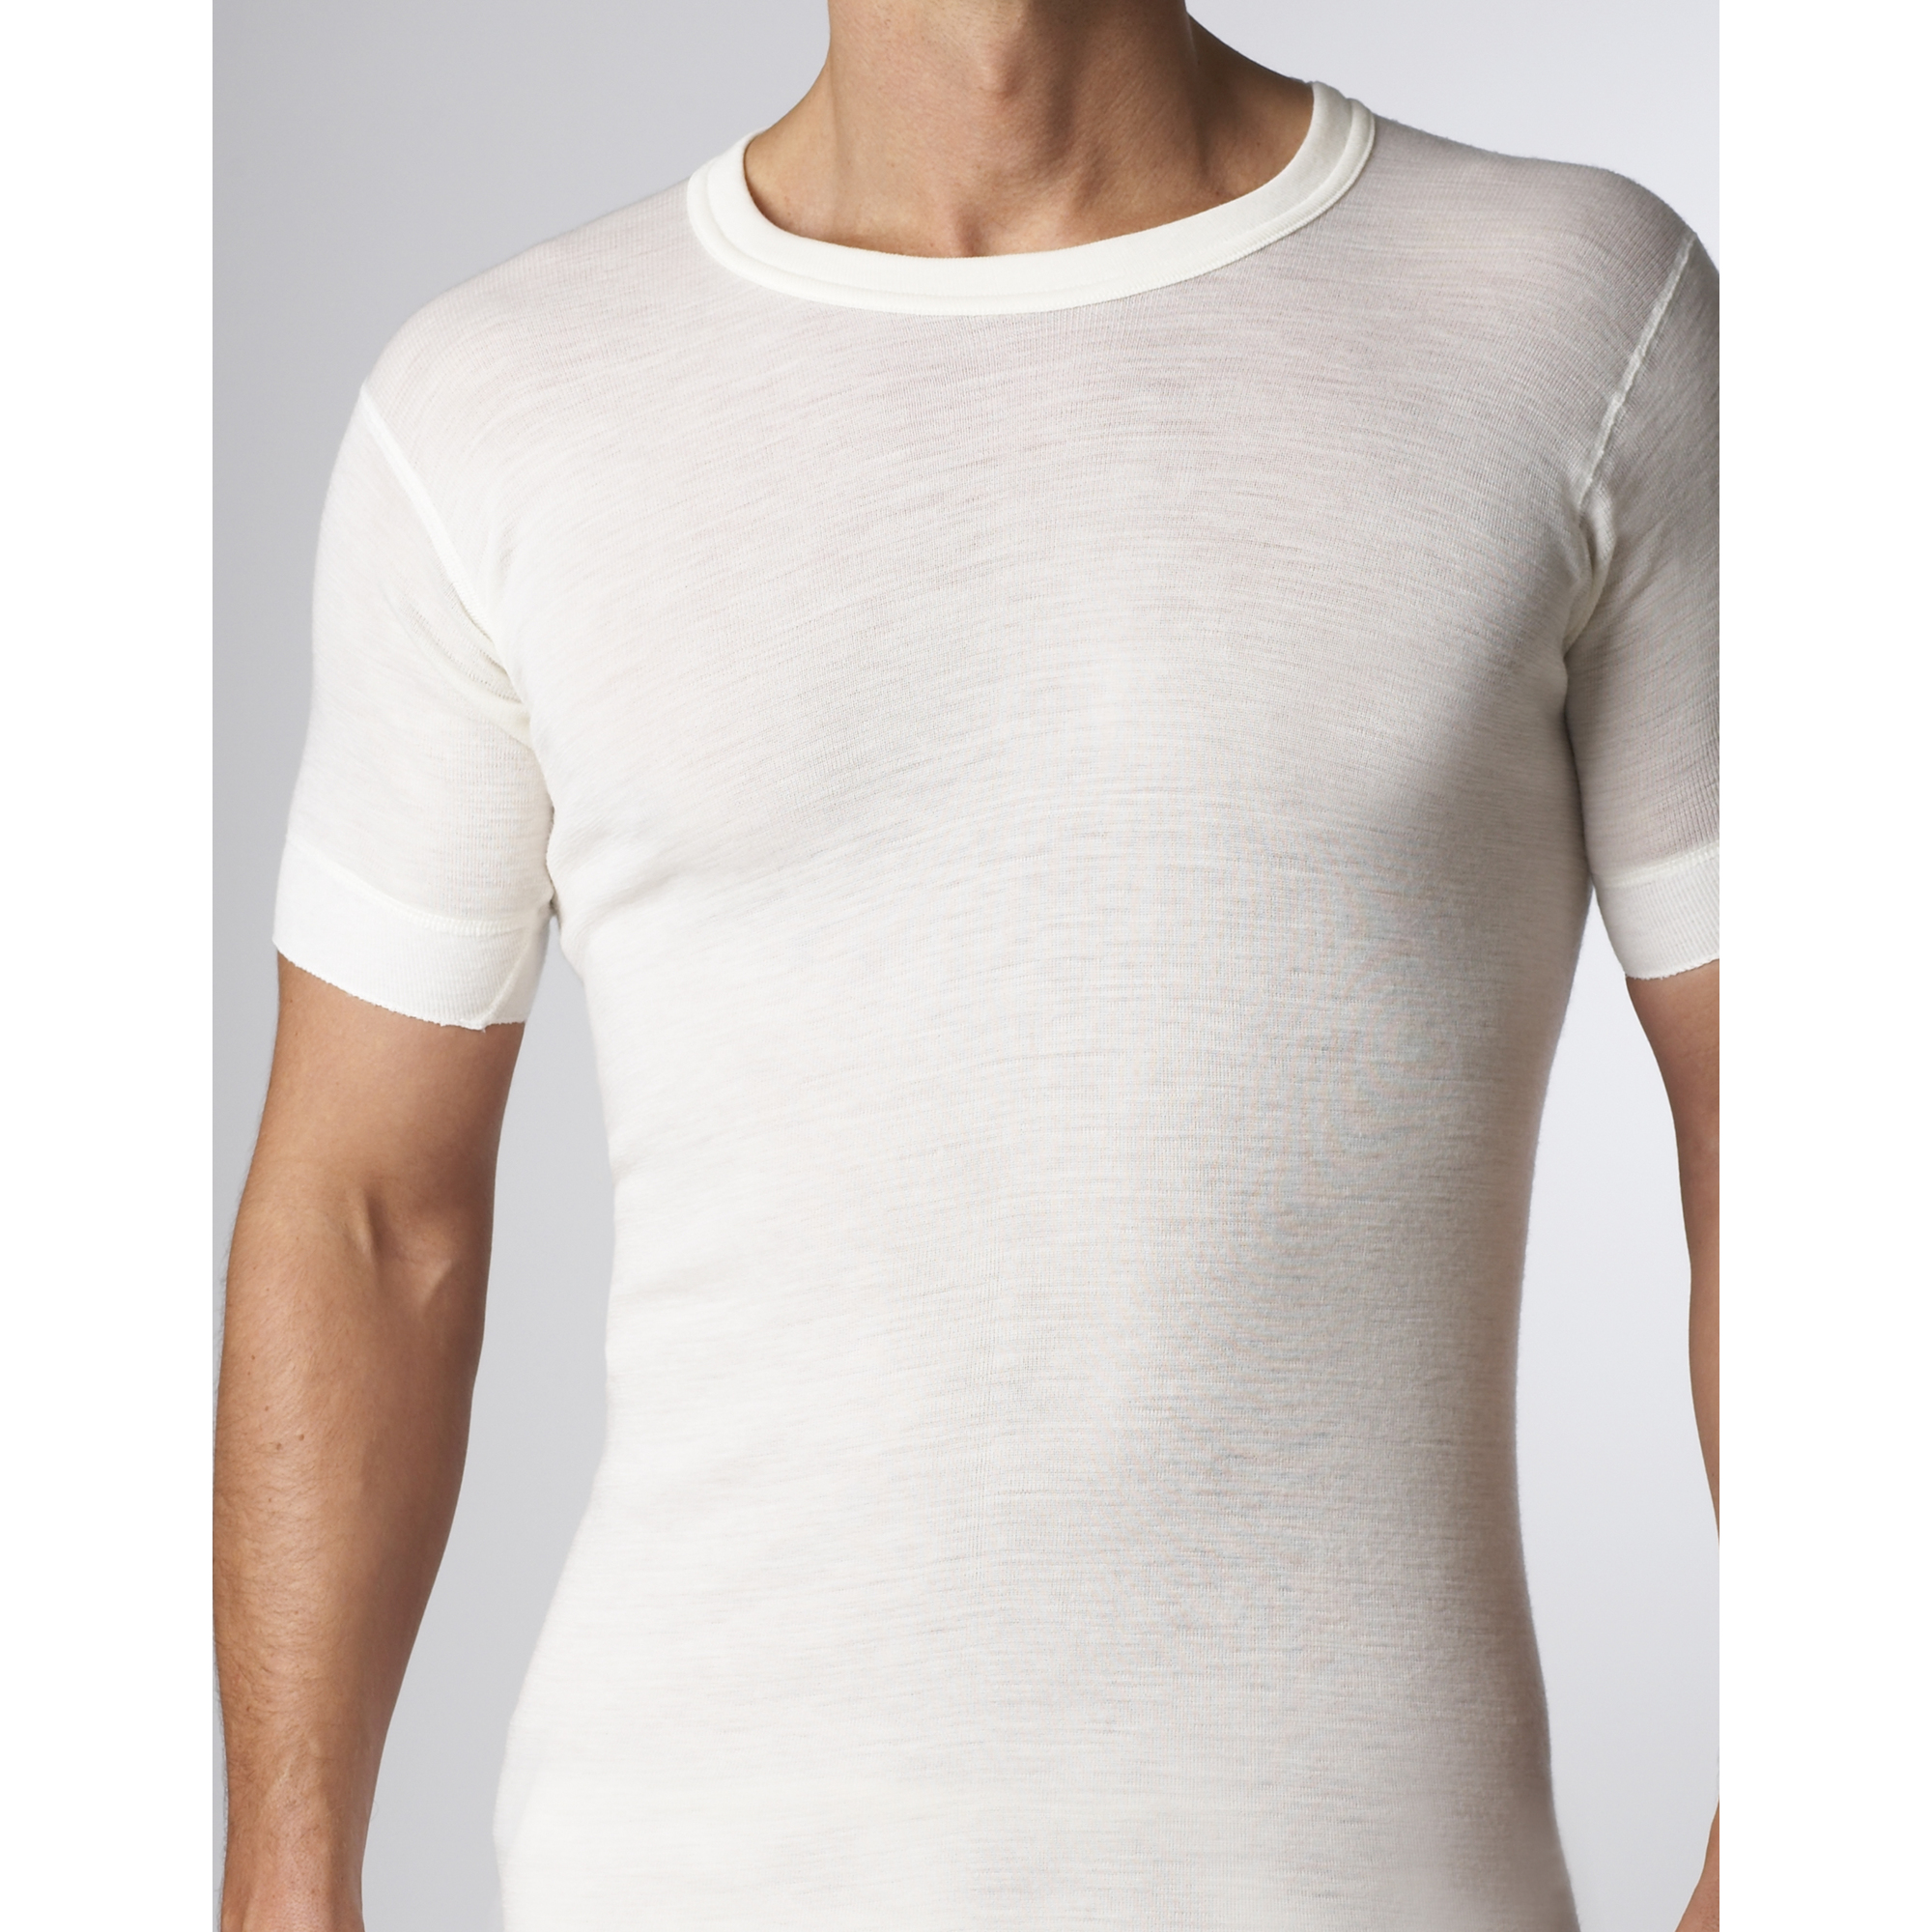 Stanfield's, Men's Superwash Wool Short Sleeve Shirt, Size M, Color NATURAL, Model 4311-Natural-M